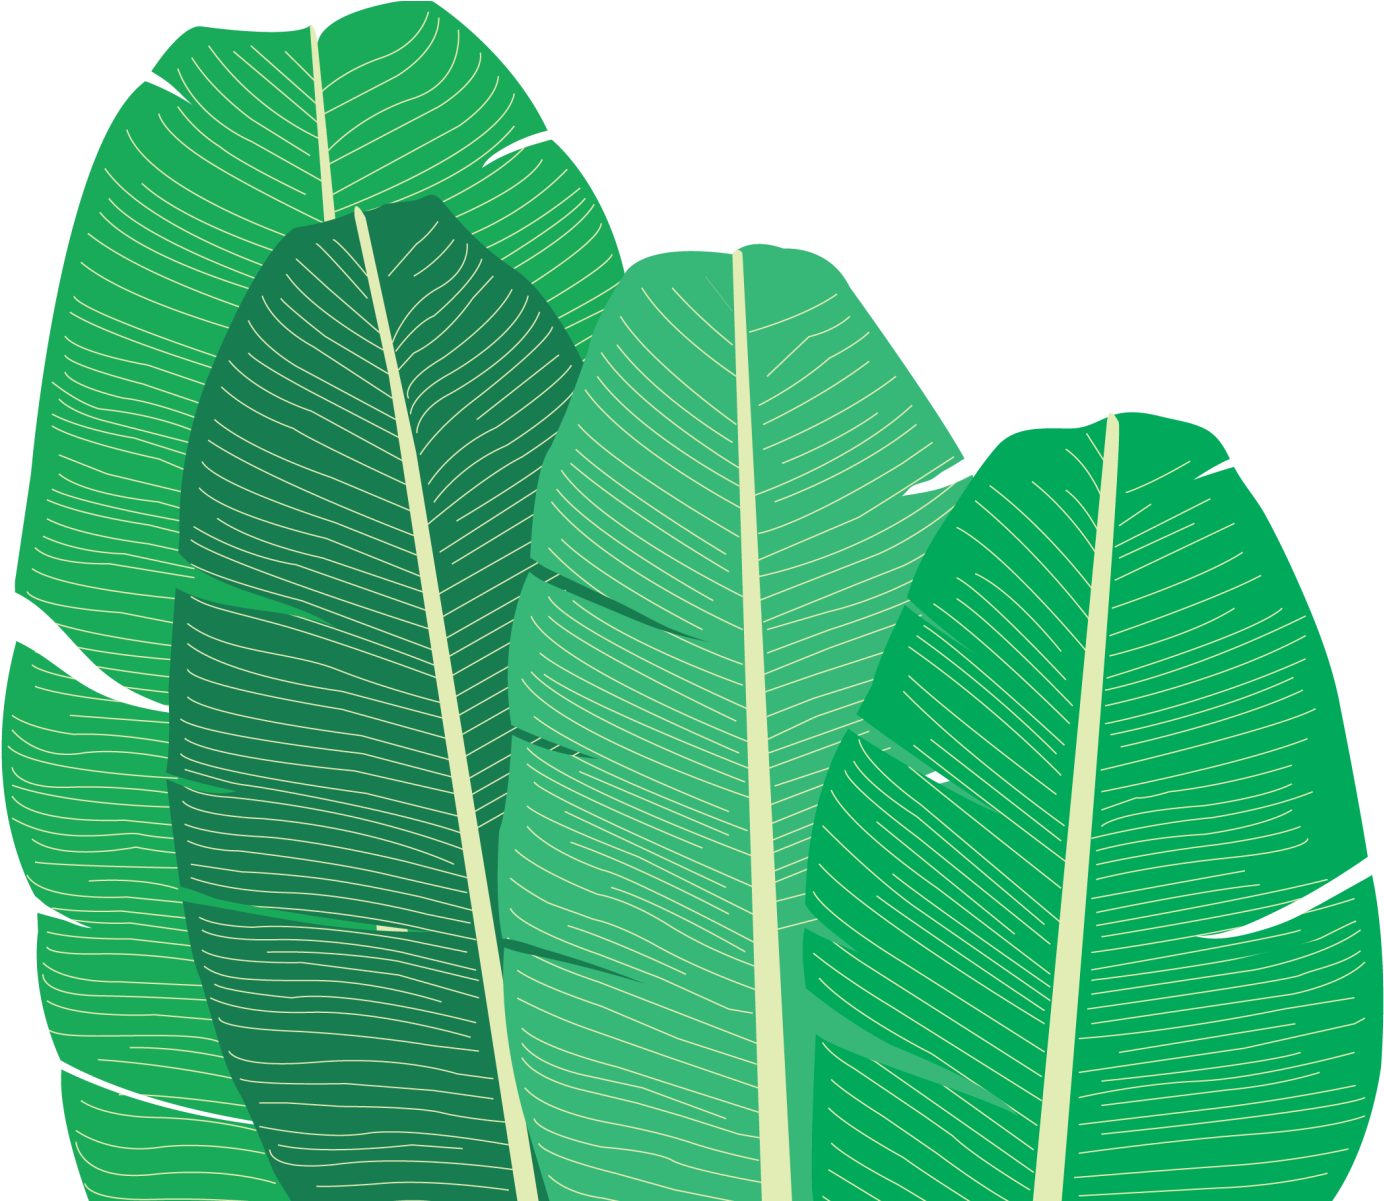 Tropical Banana Leaves Illustration PNG